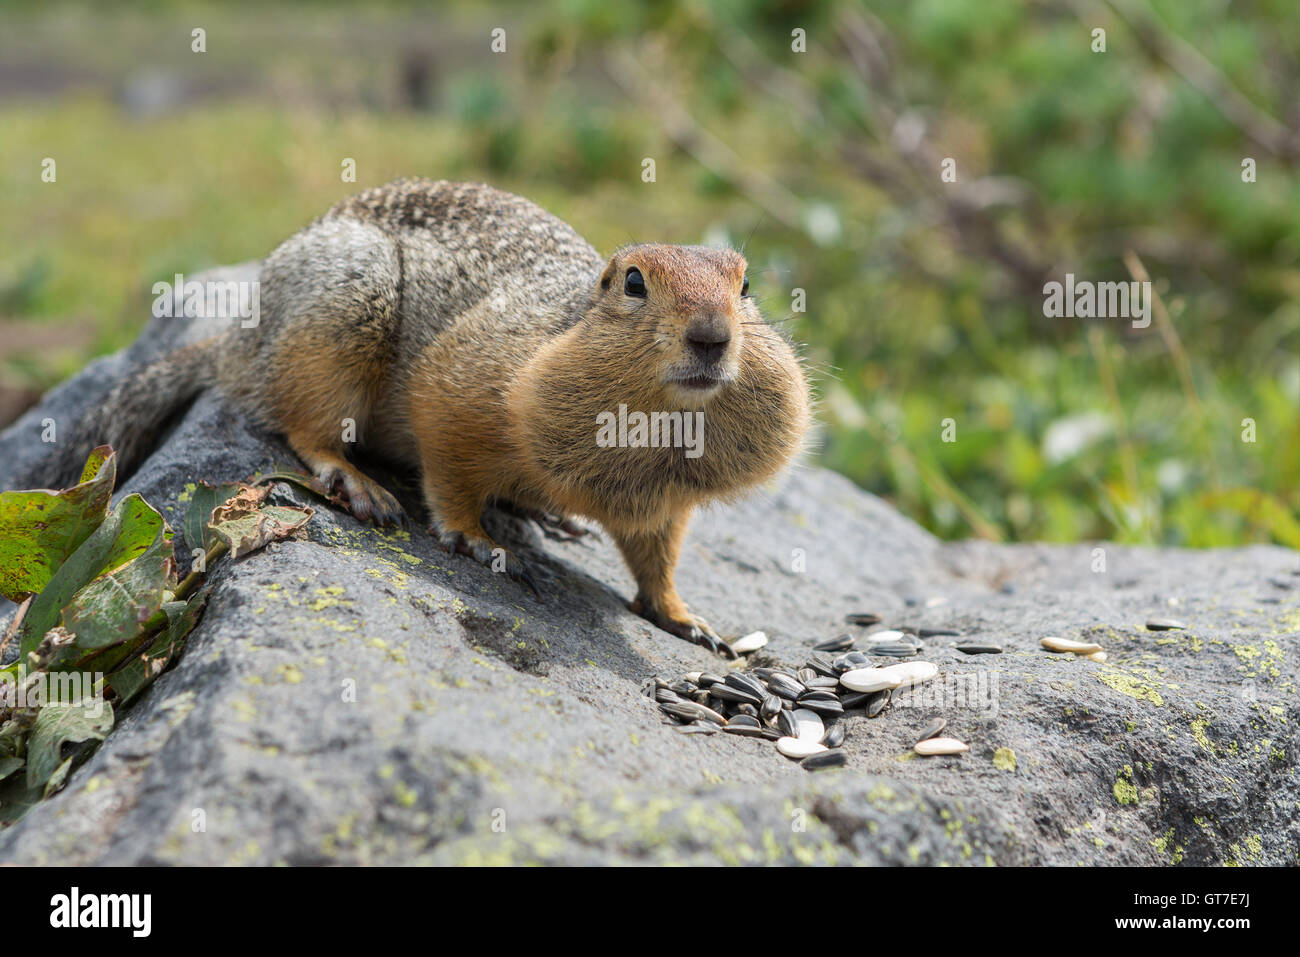 Arctic ground squirrel eating seeds on rock. Kamchatka. Stock Photo